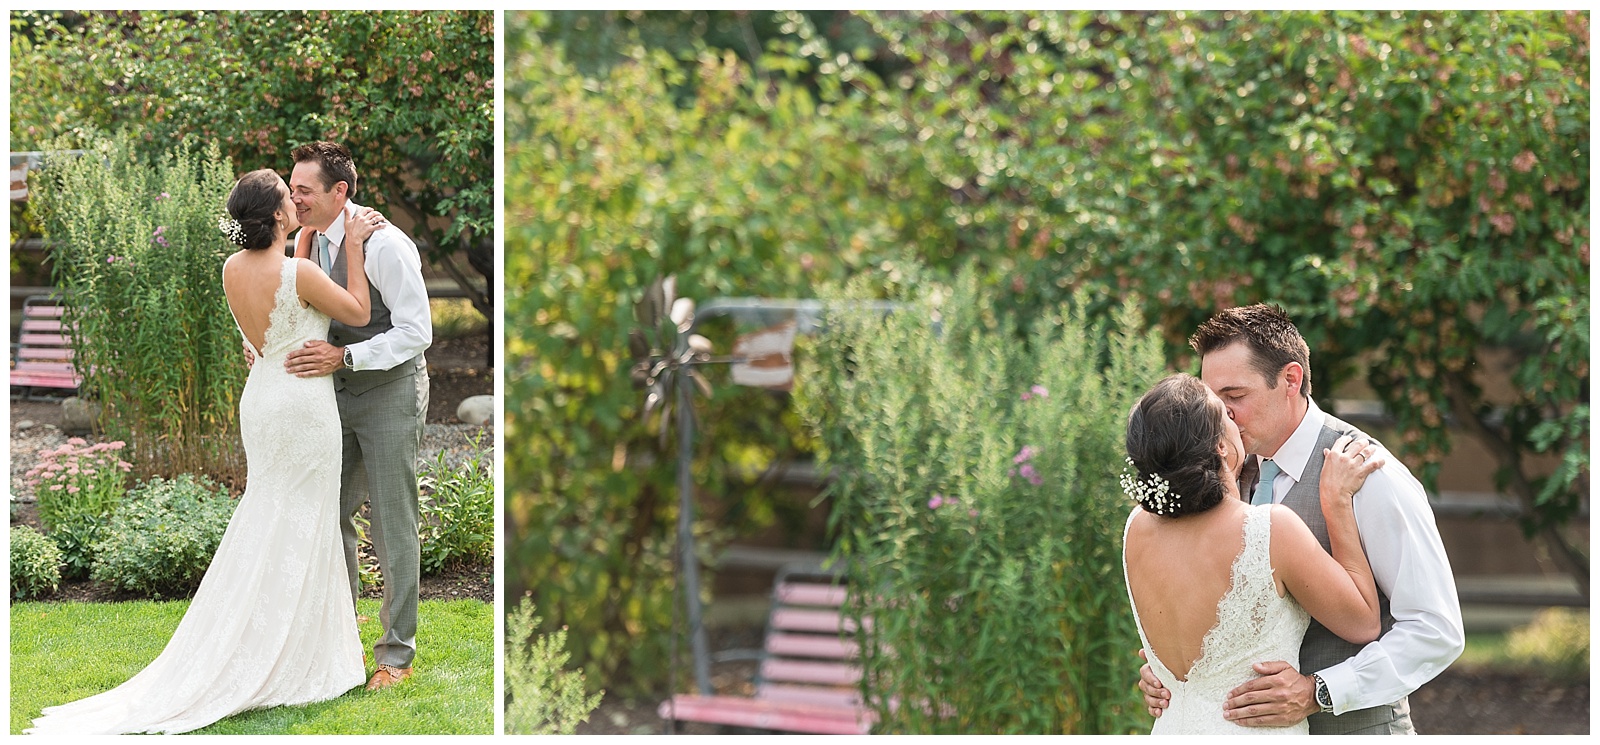 Album -Summer Sunvalley Backyard Wedding | Corri + Wes - 025.jpg